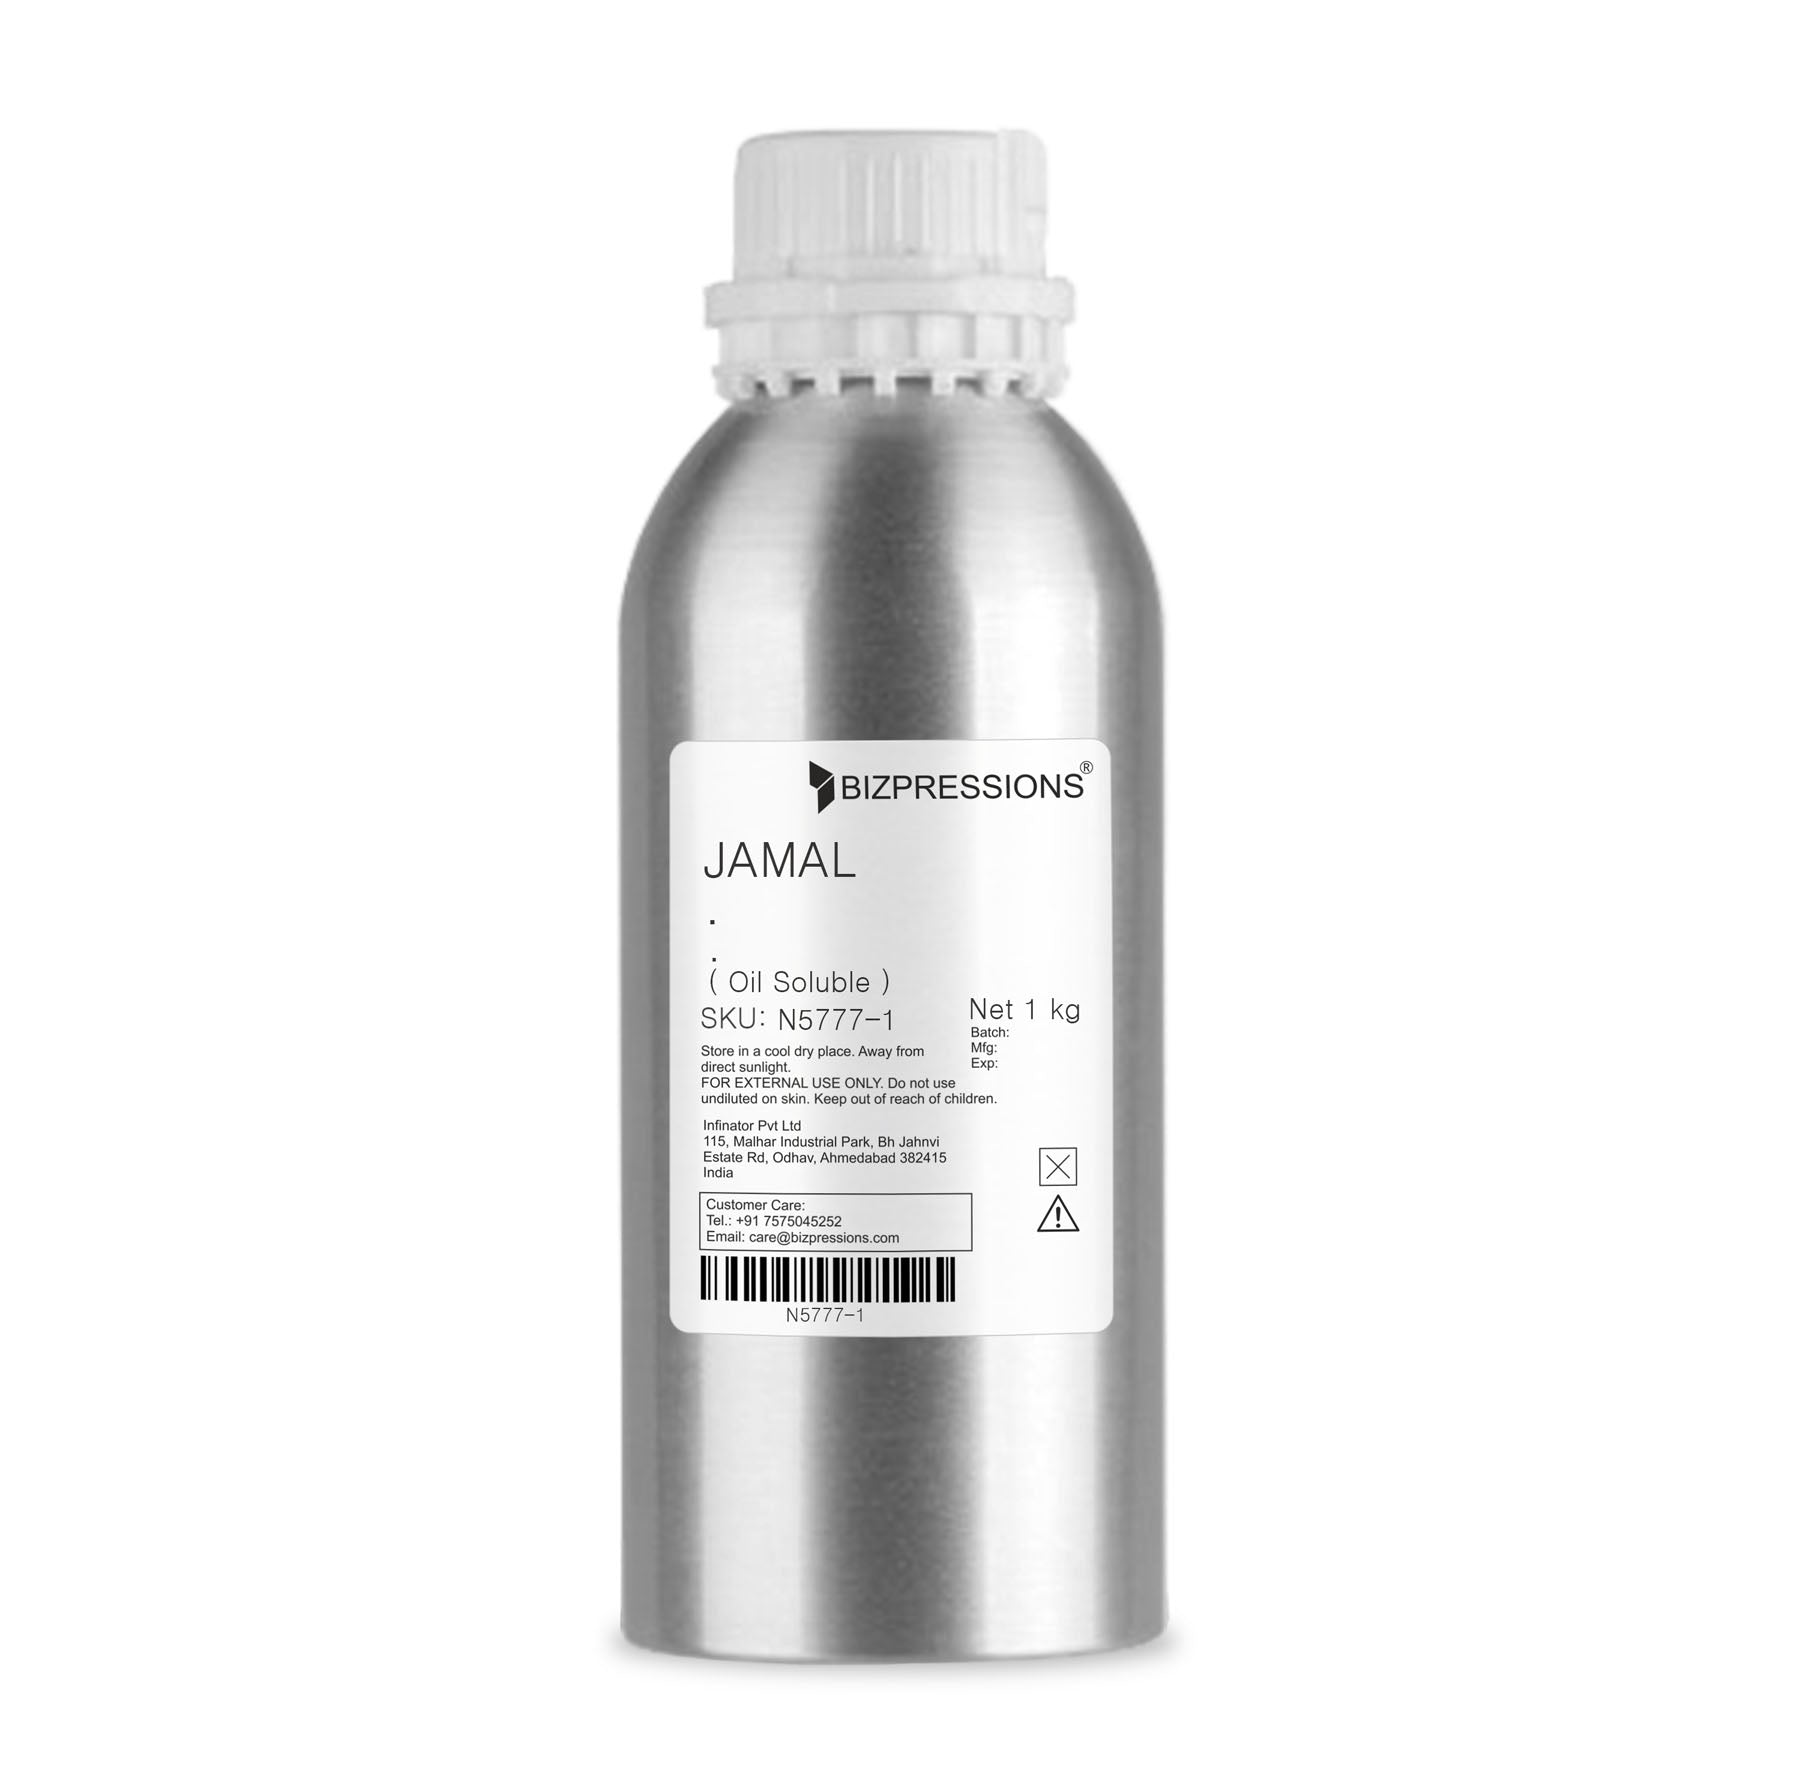 JAMAL - Fragrance ( Oil Soluble ) - 1 kg